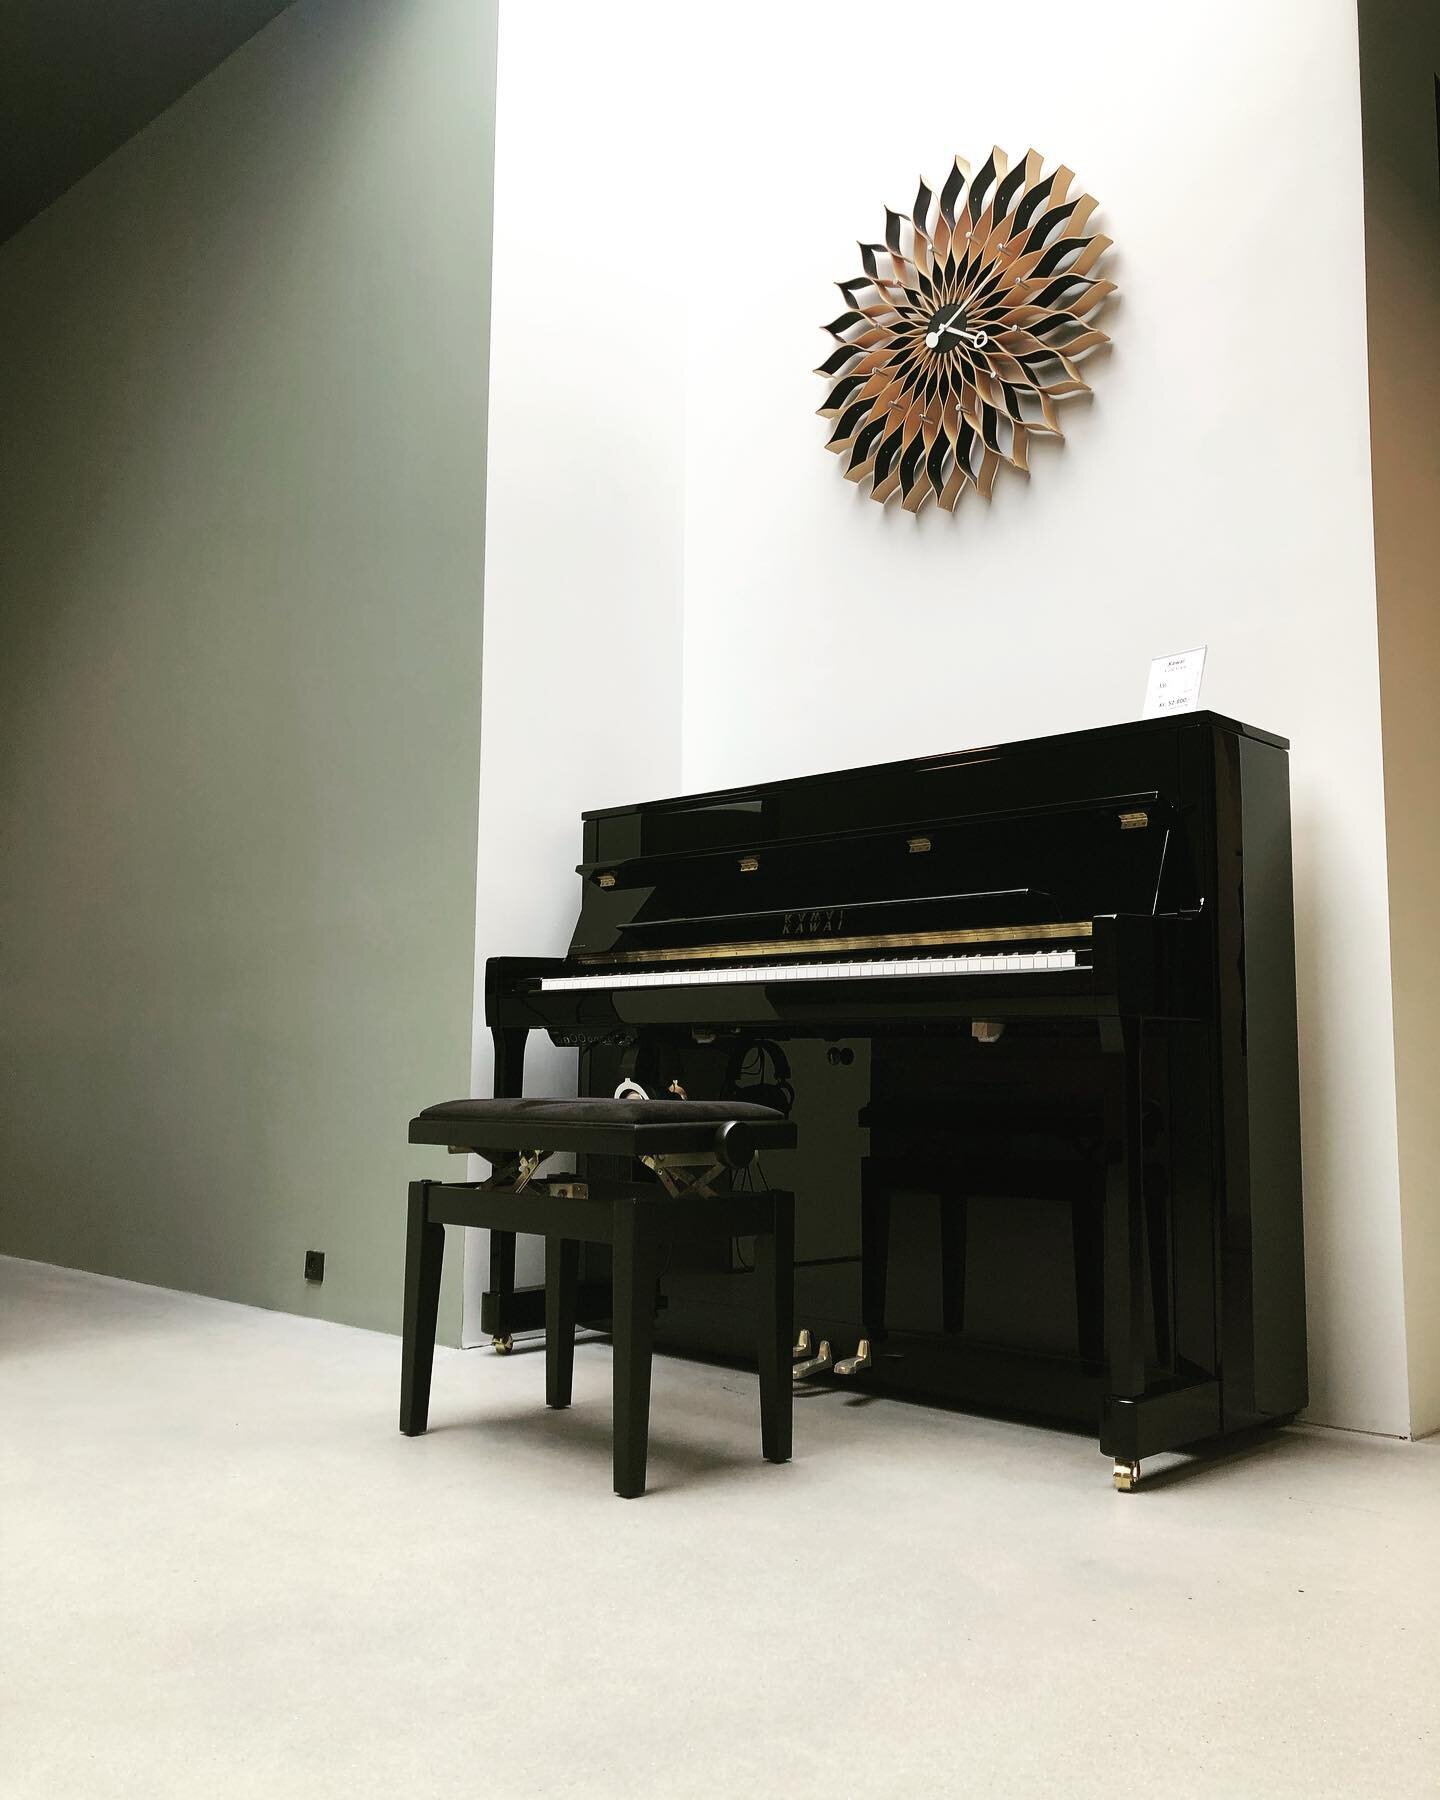 De nye lokale hos Juhl-S&oslash;rensen :) #klaverakademiet #juhls&oslash;rensen #digitalpiano #steinway #klaverundervisning